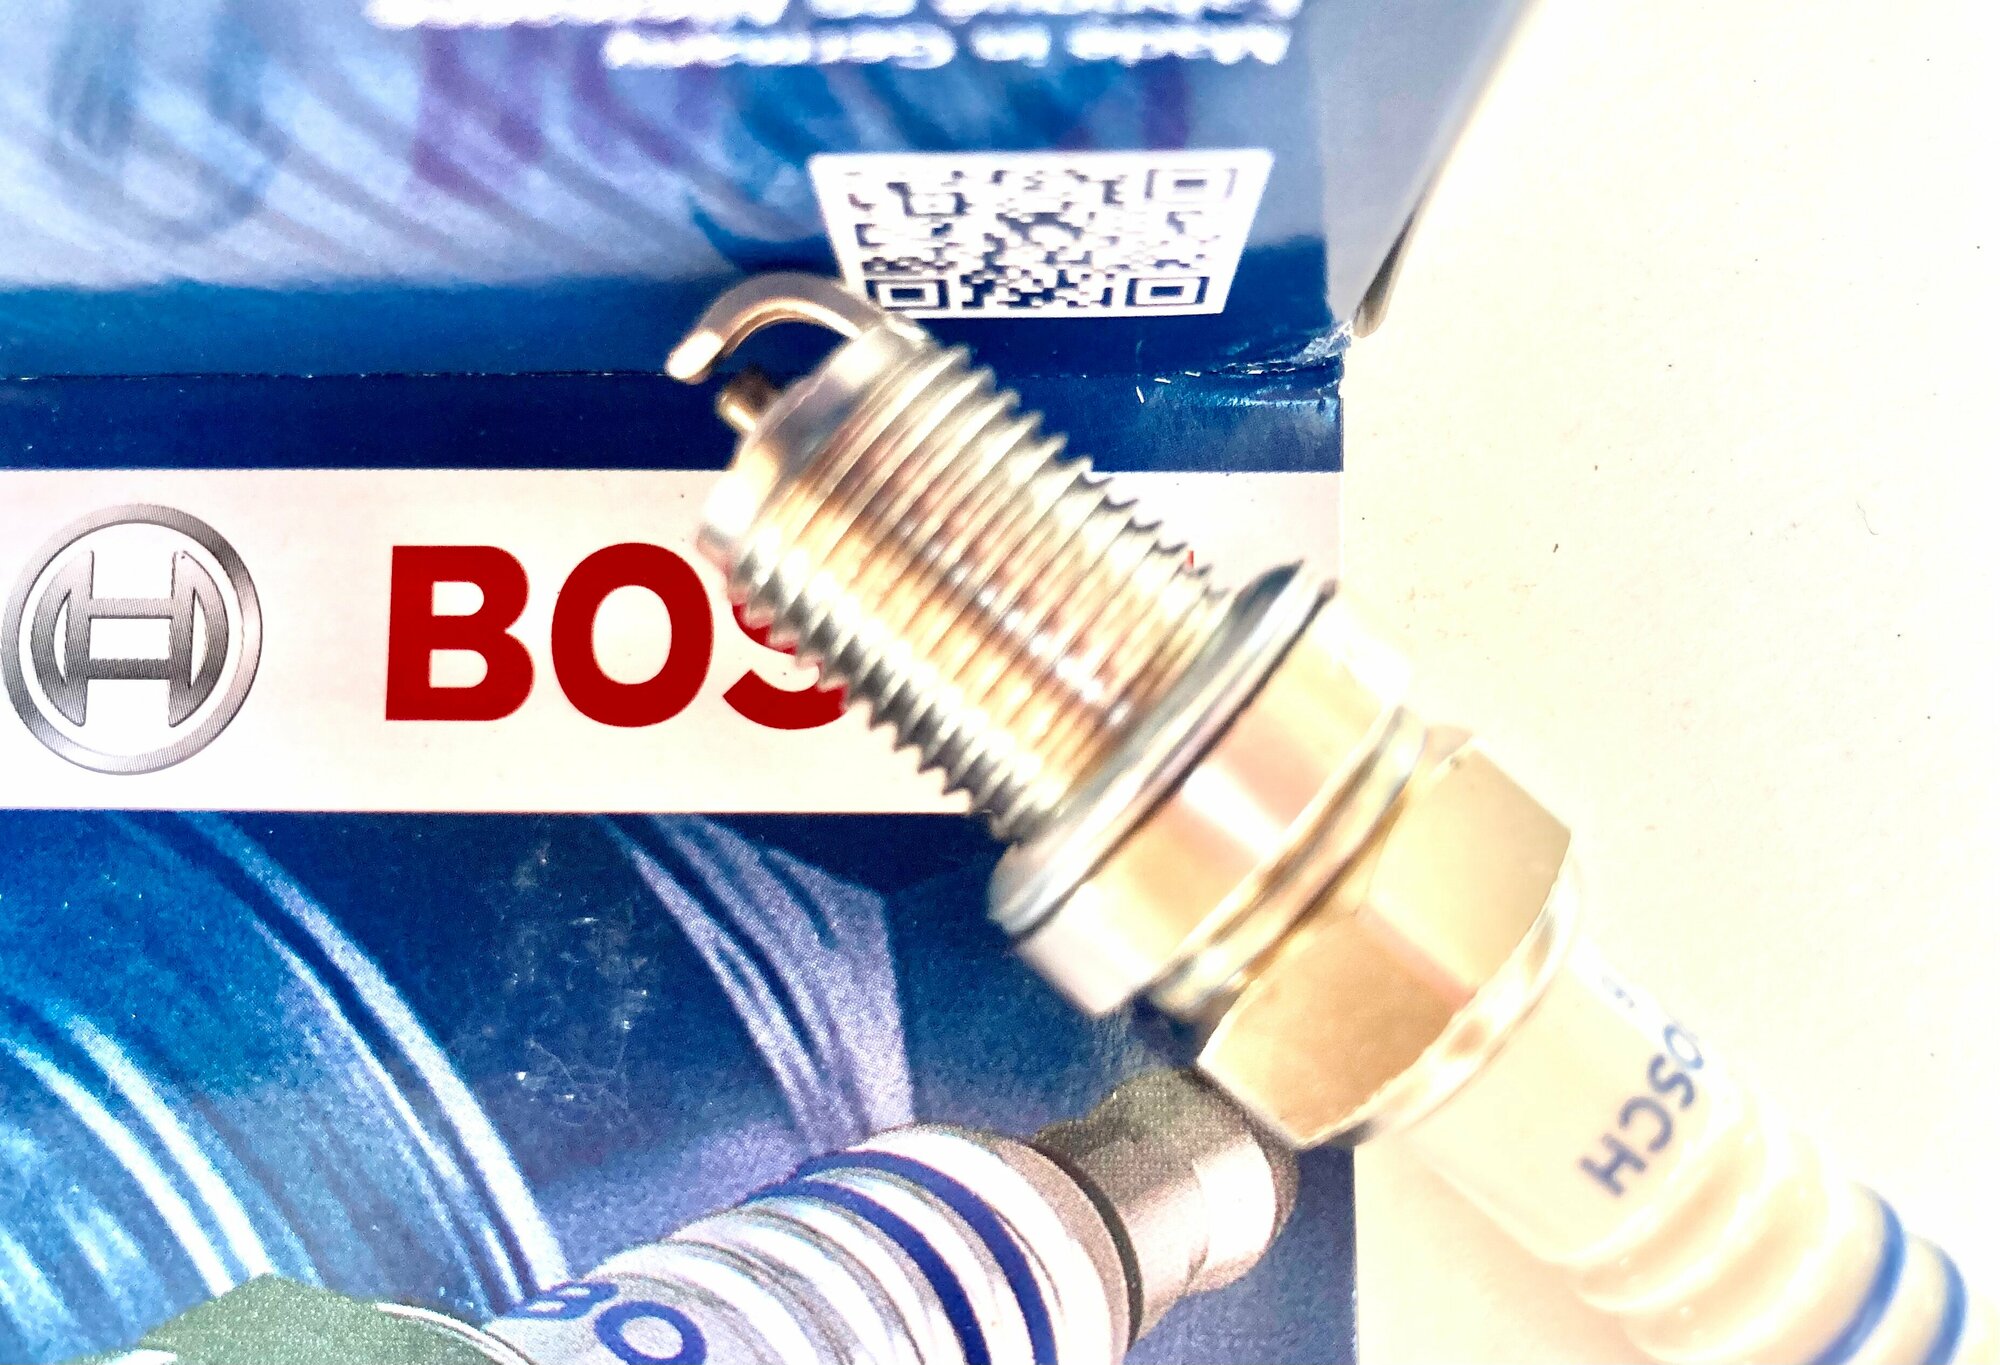 Свечи зажигания Bosch FR7DC+ 0242235666 для автомобилей ВАЗ-LADA Vesta/LARGUS/X-RAY (16ти клап)